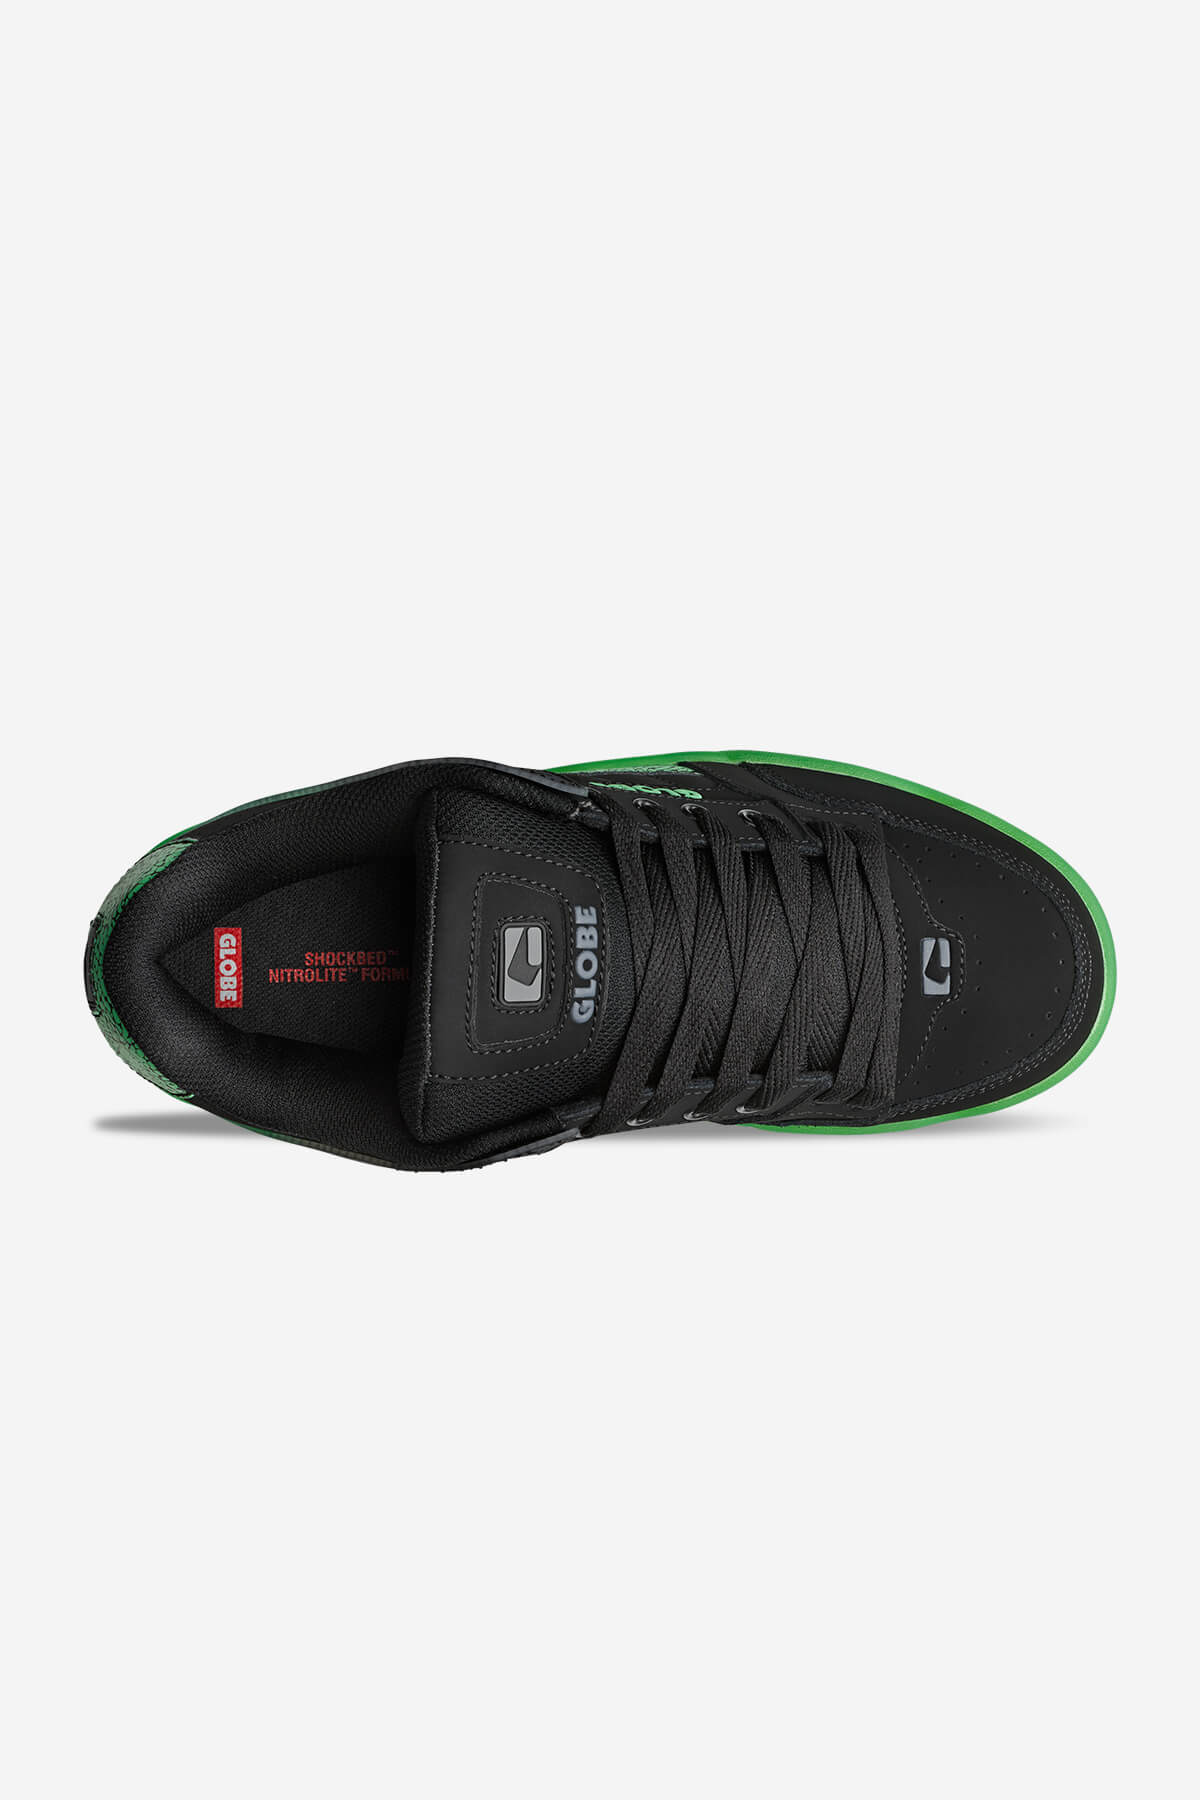 tilt noir vert stipple skateboard chaussures